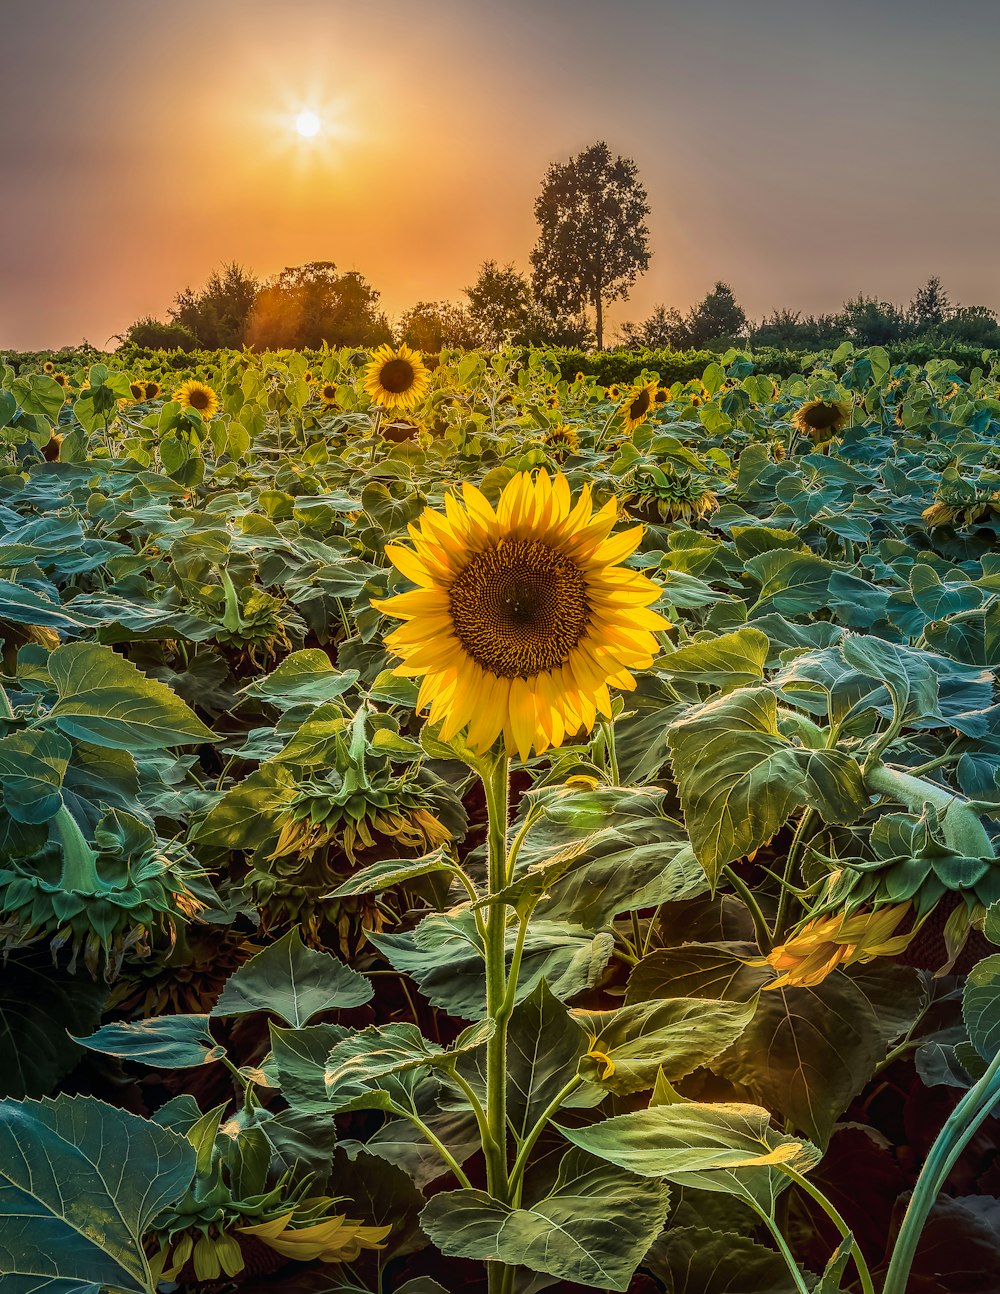 a sunflower in a field